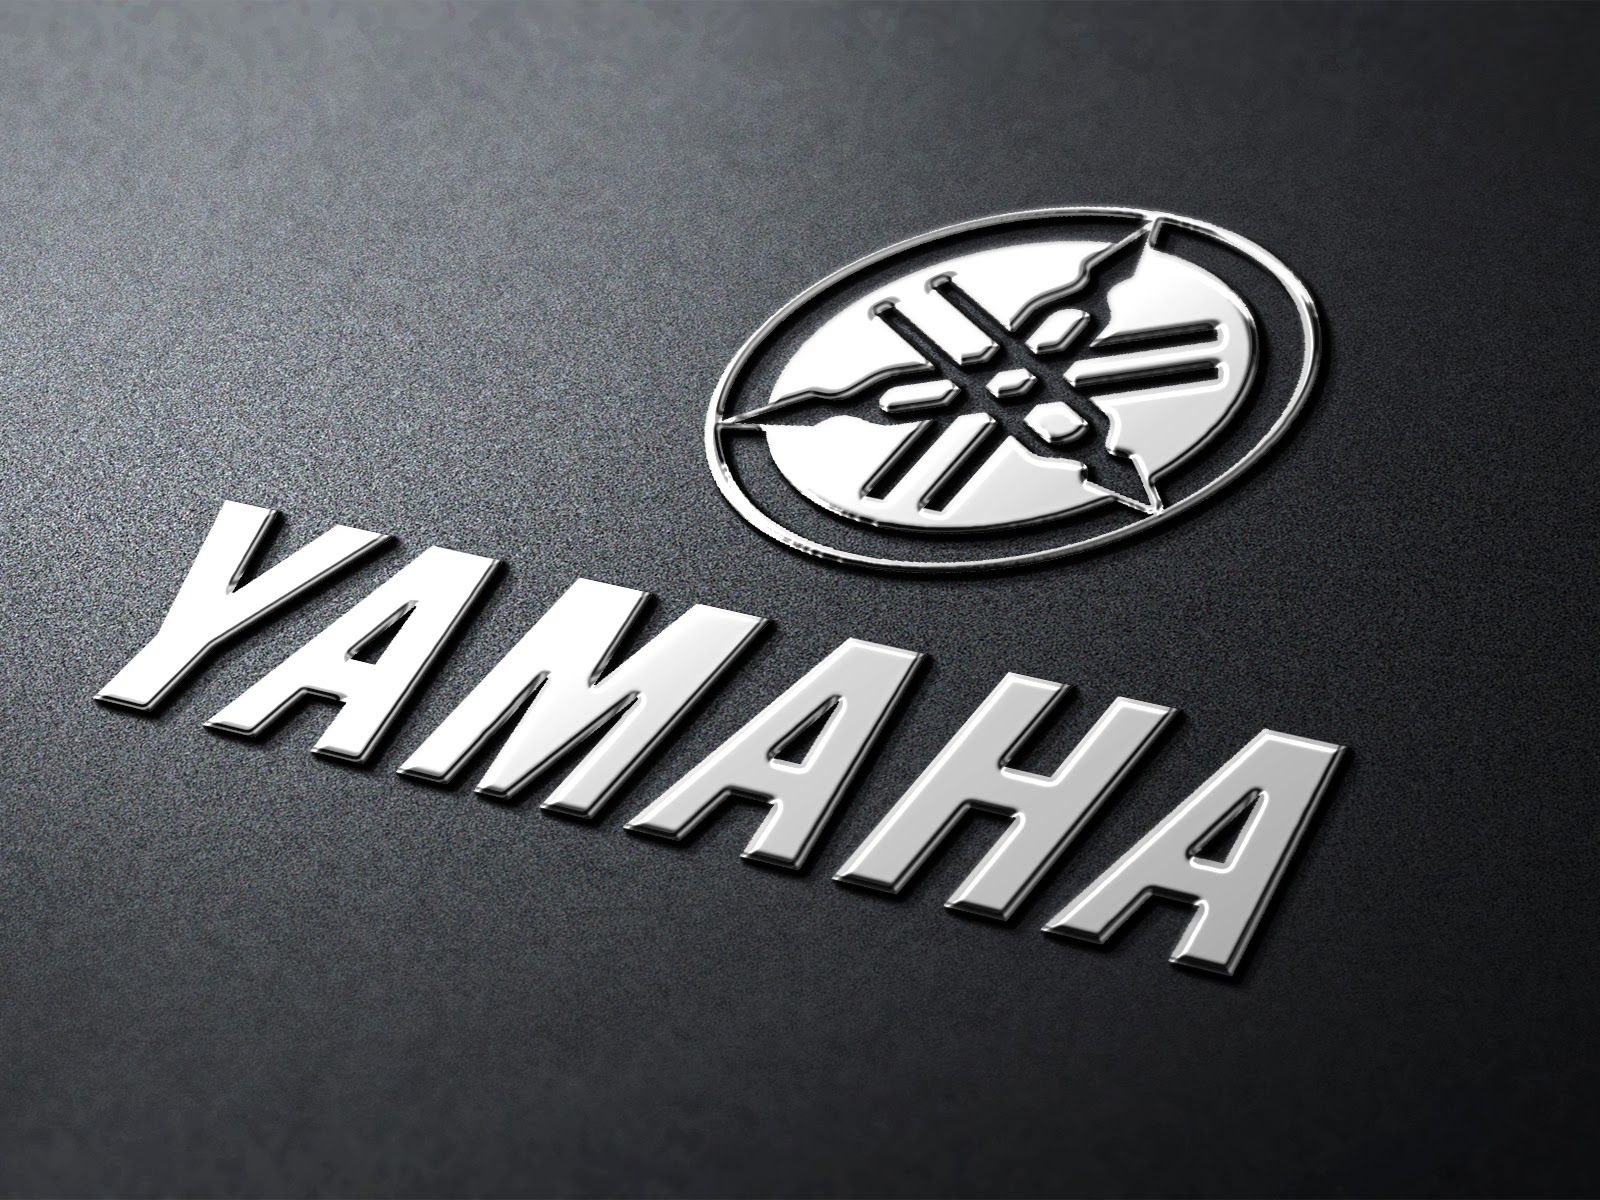 Yamaha desktop s on